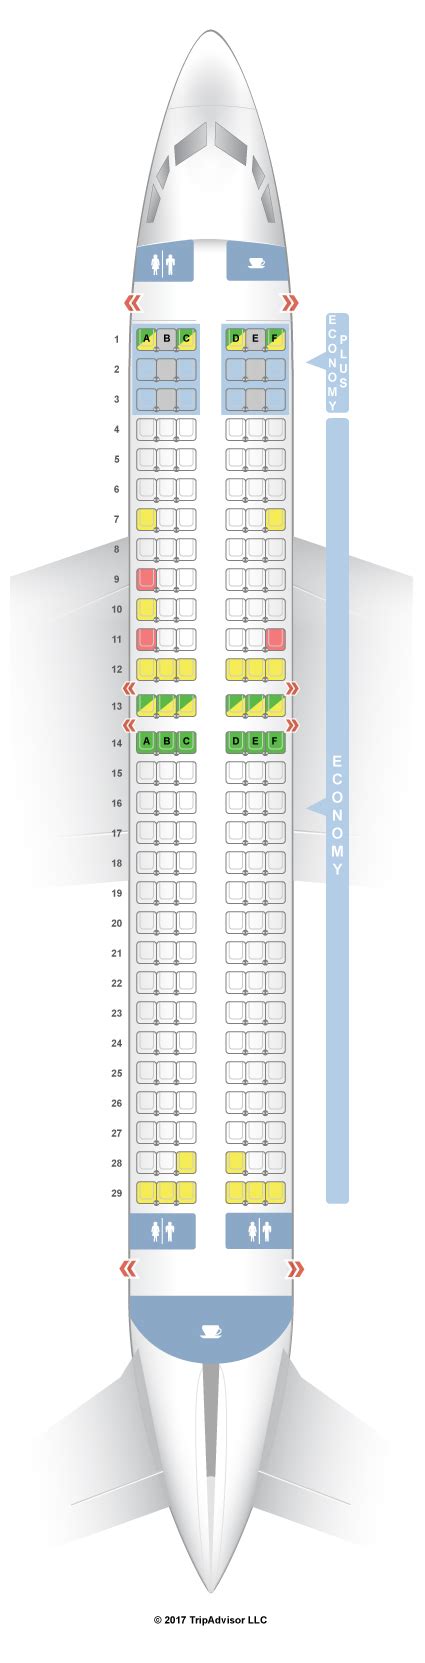 737 800 seating chart westjet